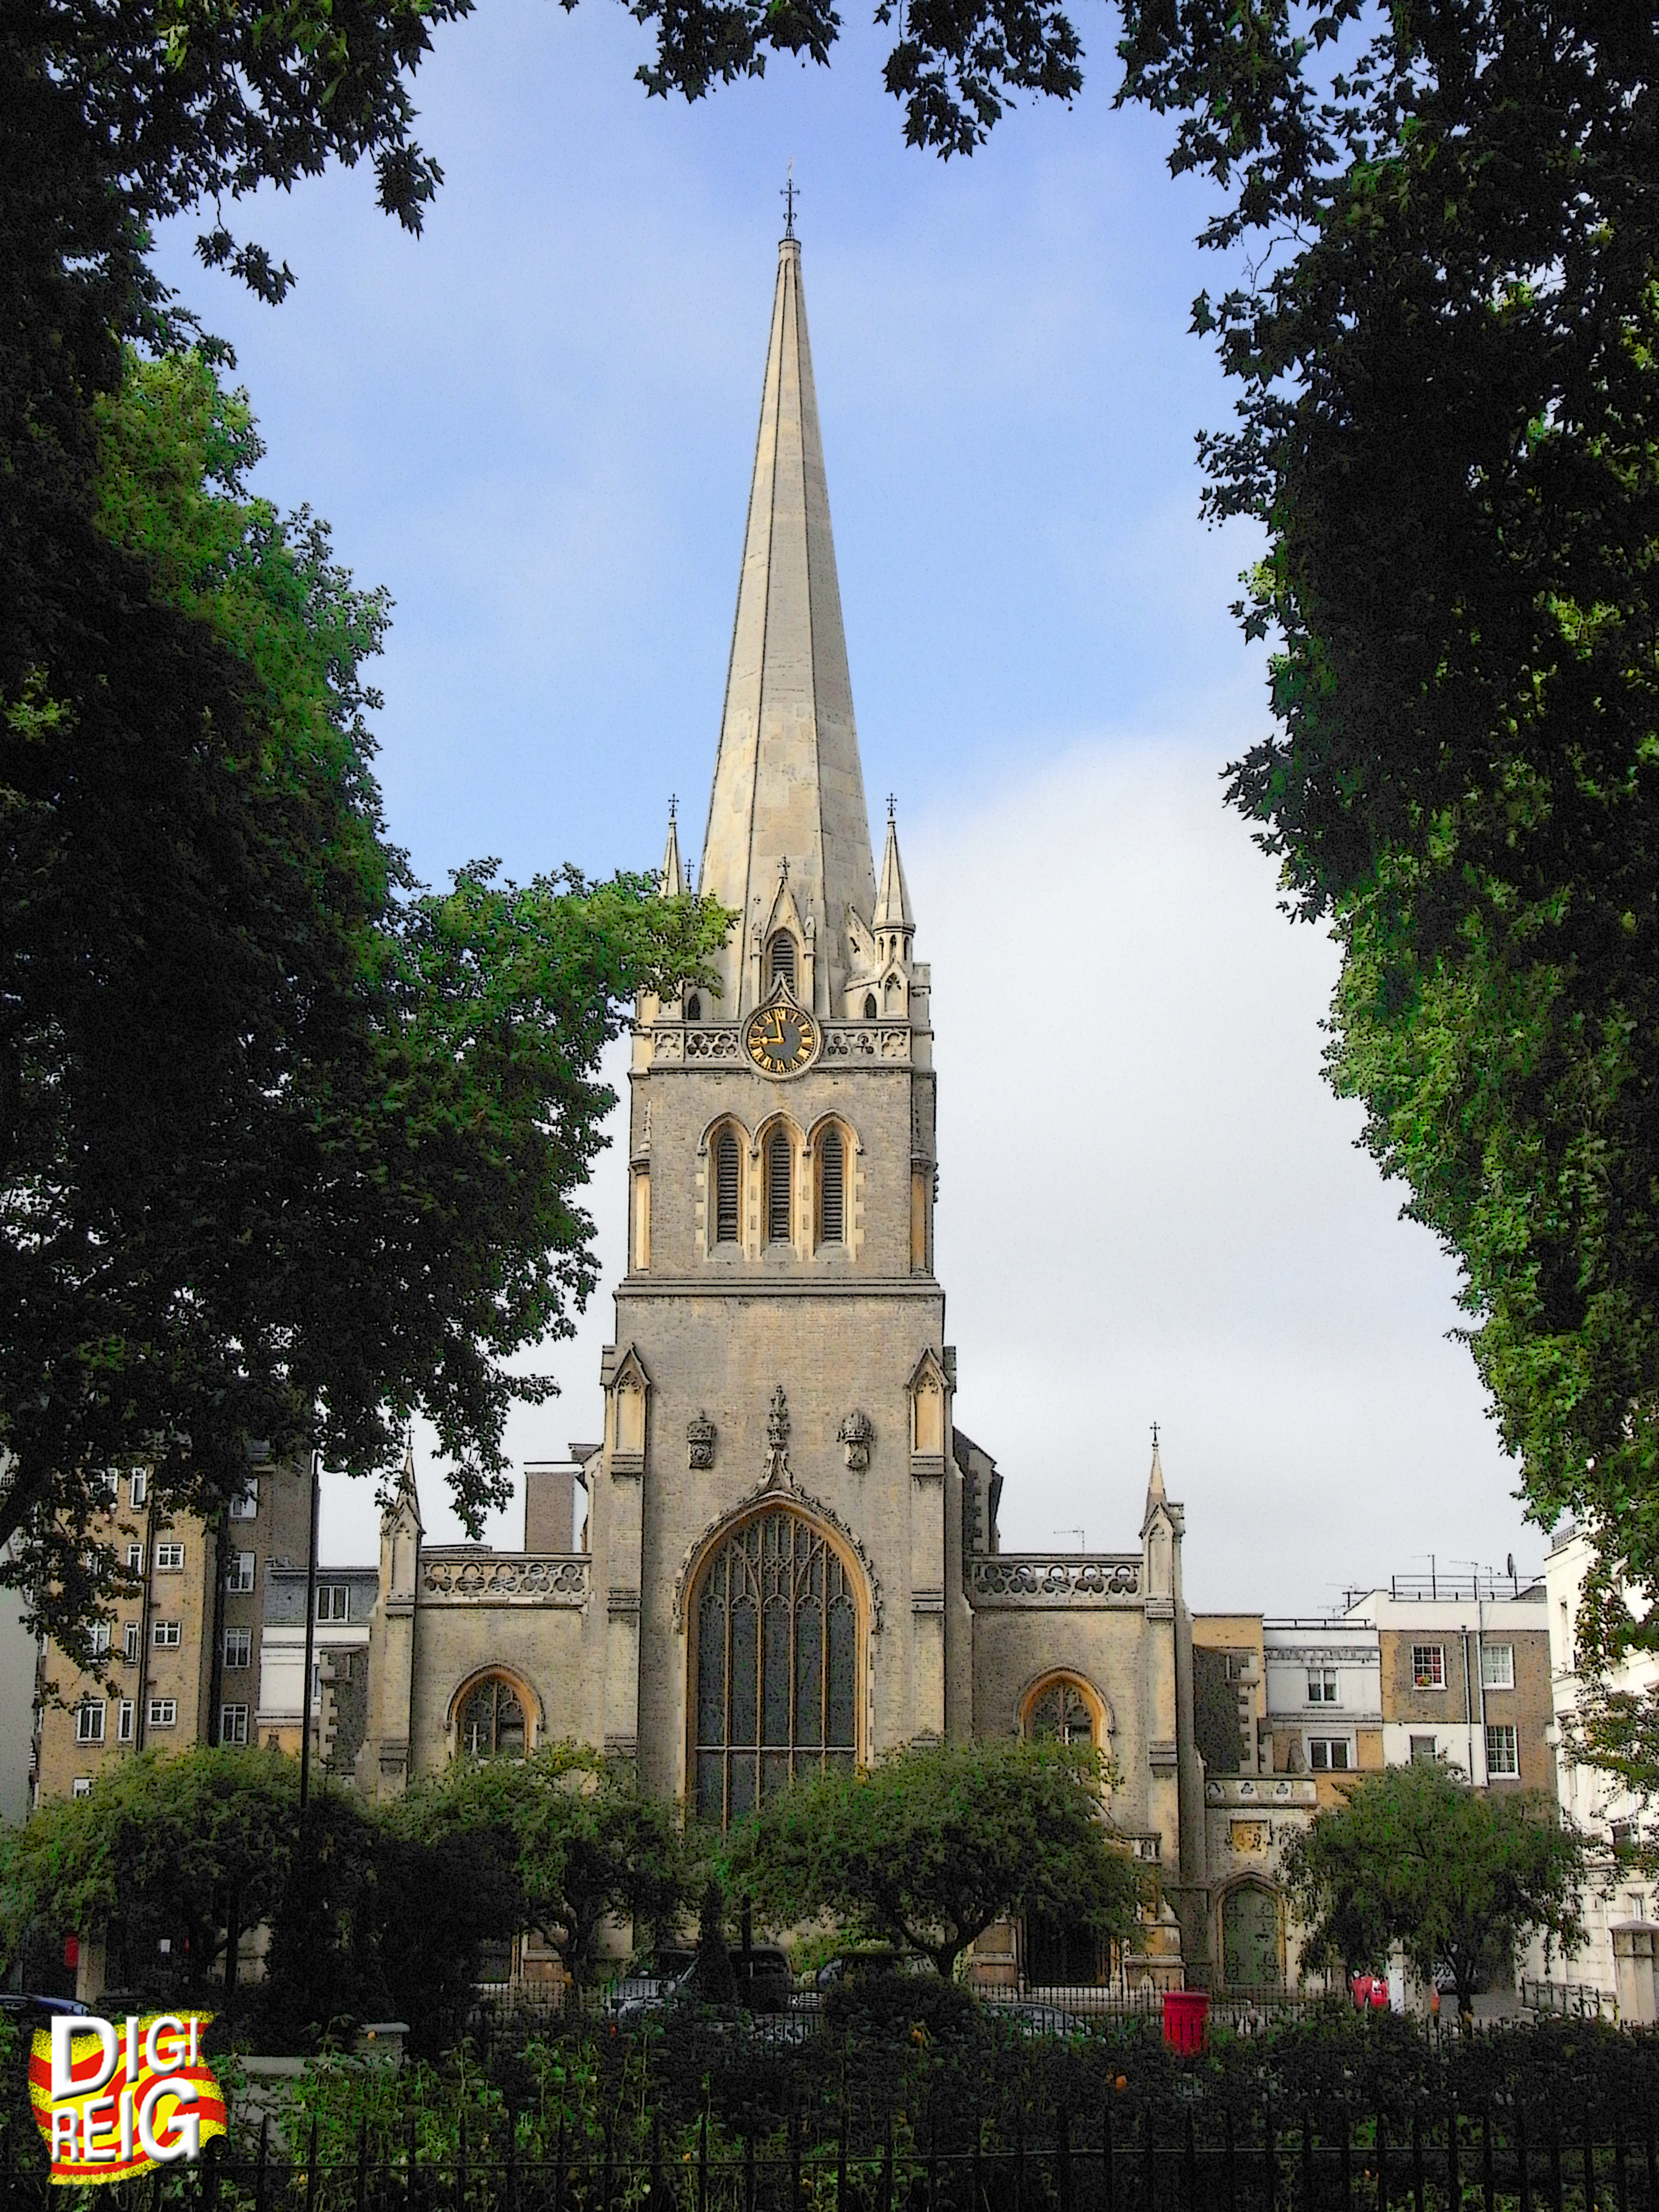 Foto: Iglesia Saint James - Londres (England), El Reino Unido